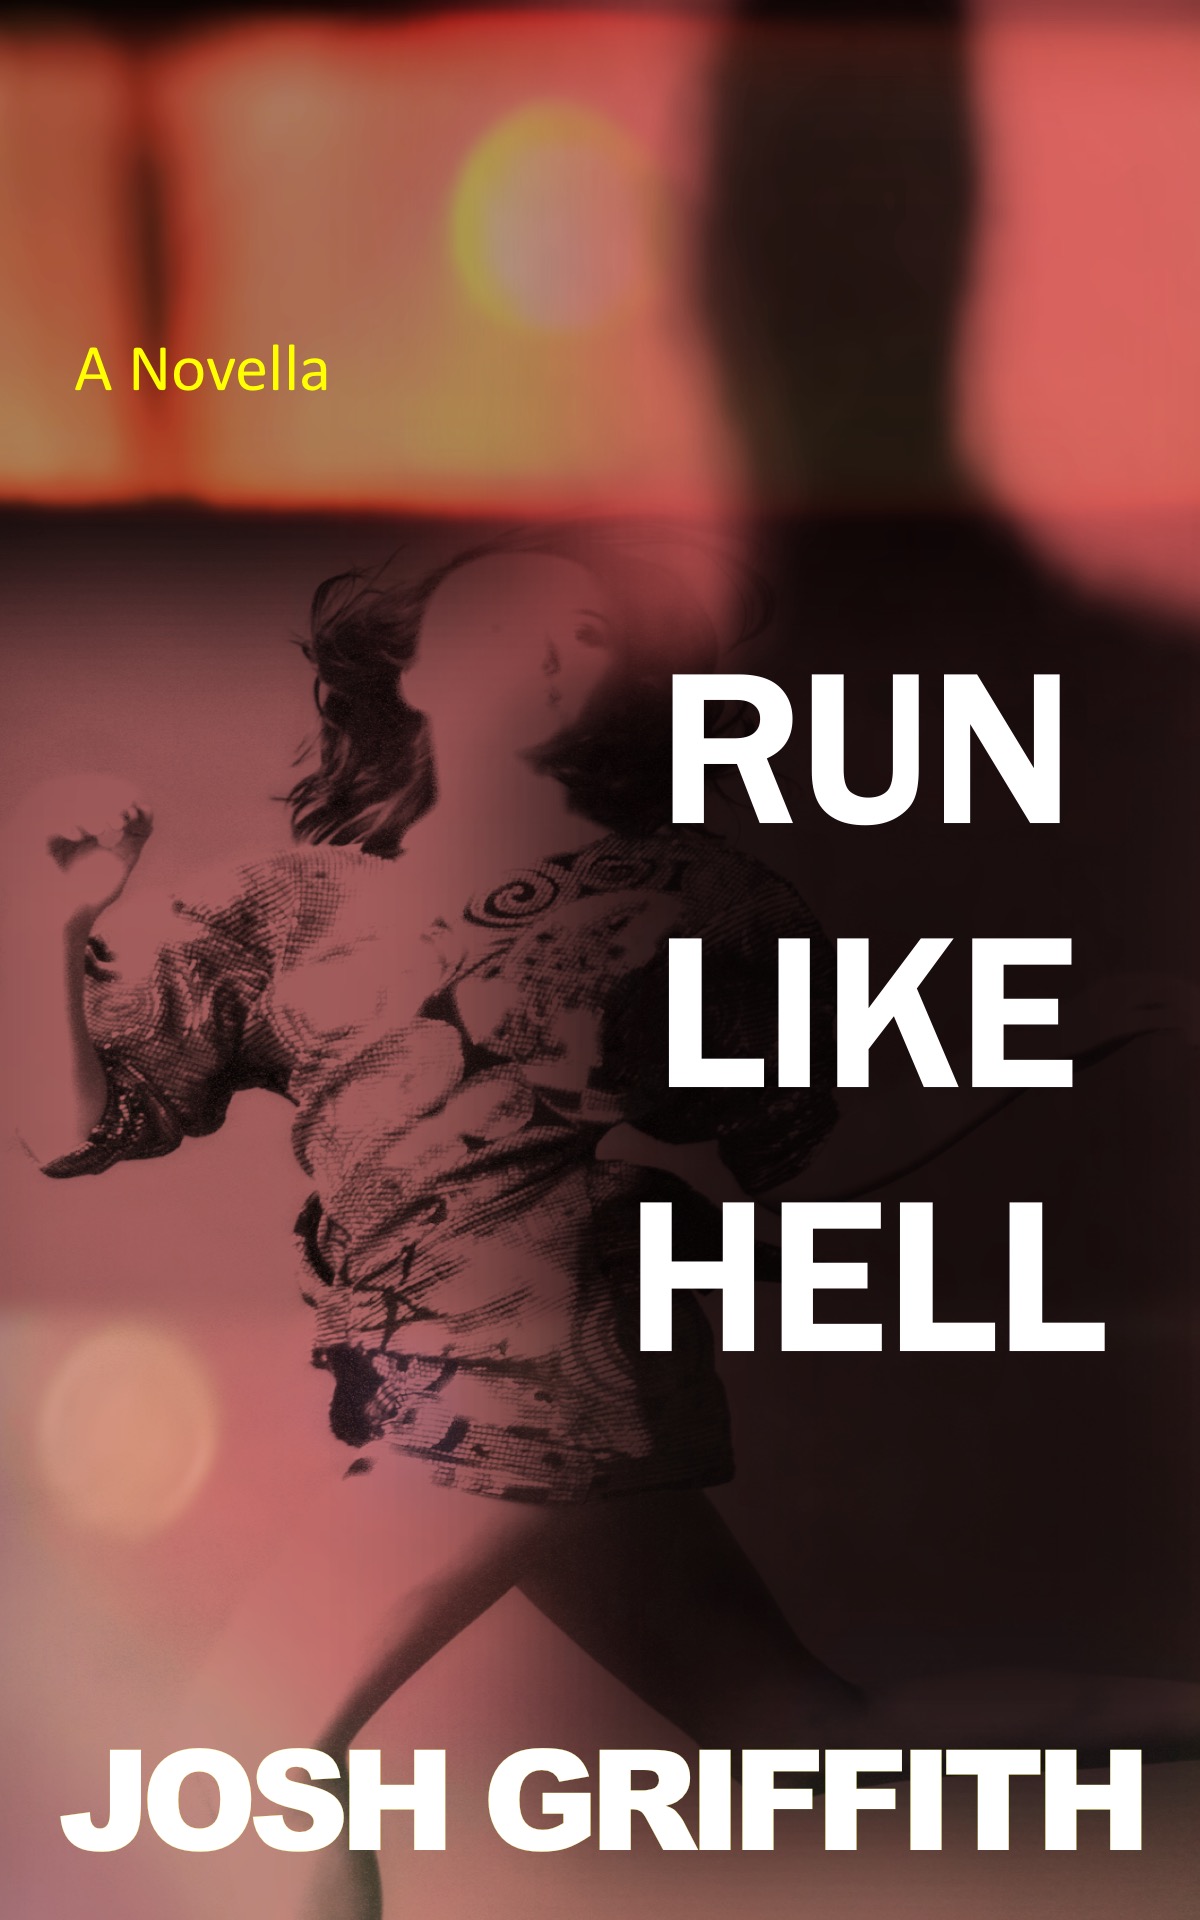 Run Like Hell - book author Josh